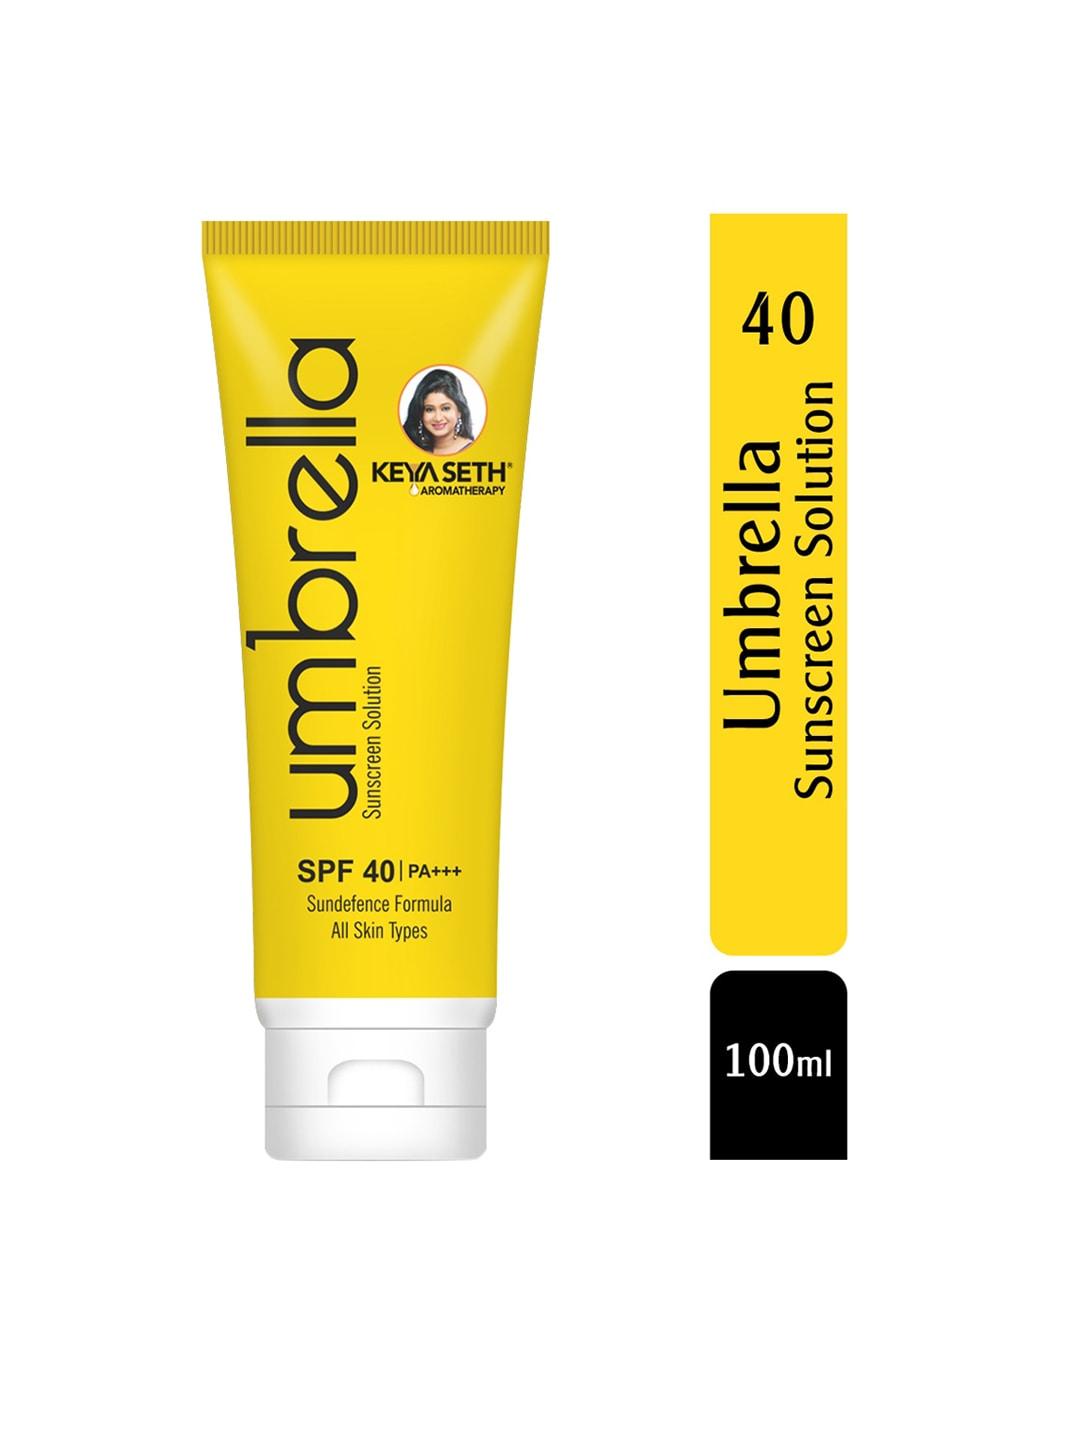 KEYA SETH Umbrella Sunscreen Solution for All Skin Types with SPF 40 - 100 ml